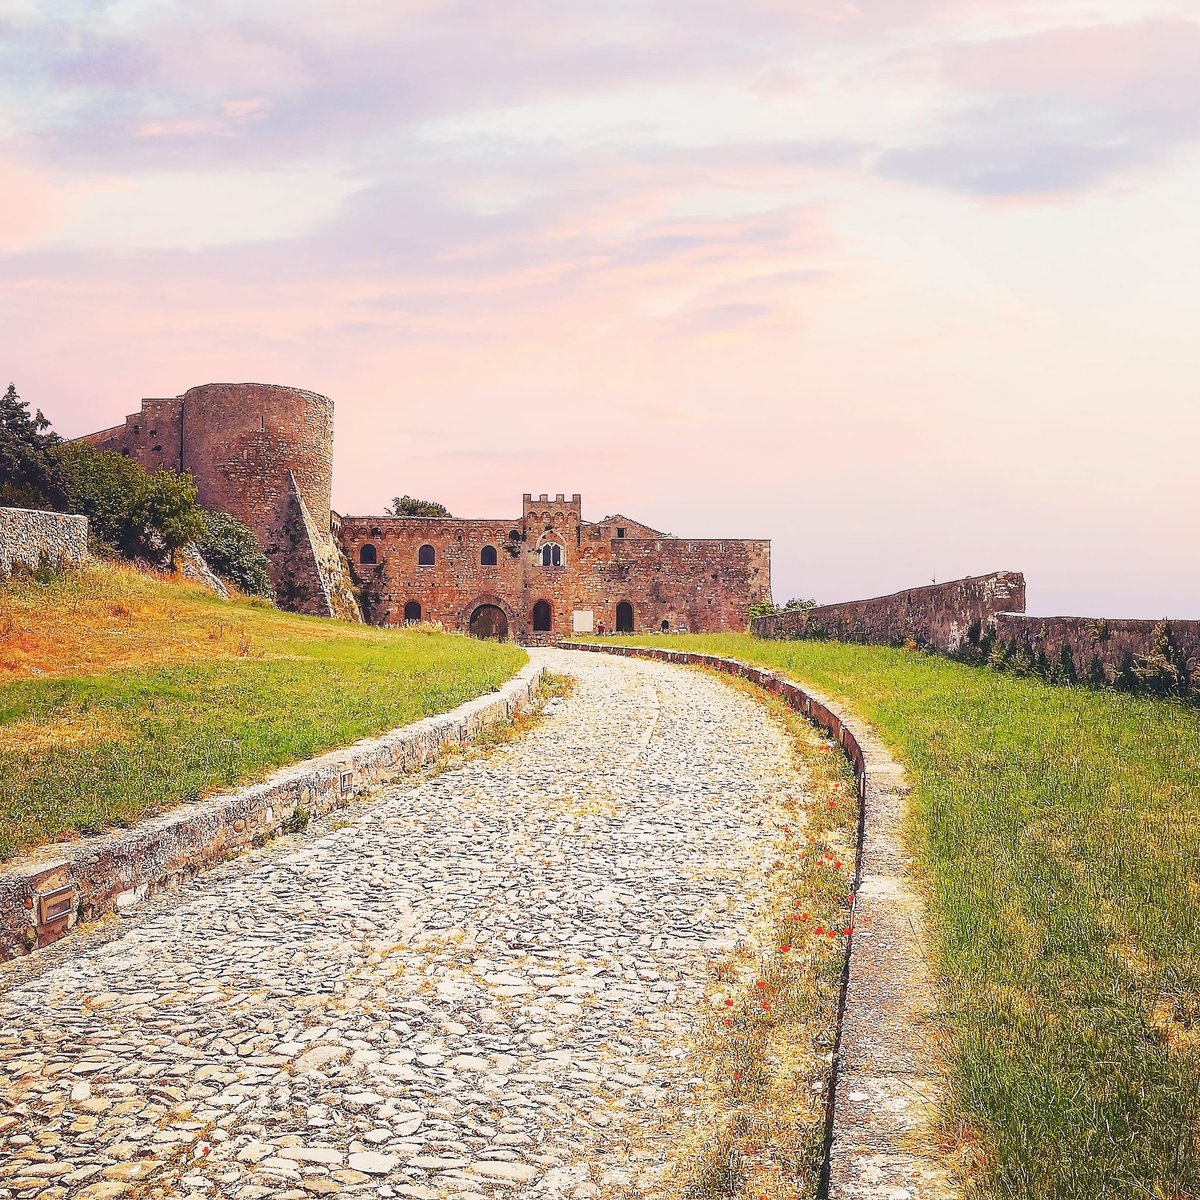 È quasi magia...✨✨
Castello Ducale di Bovino (FG).
#montidauni 
#Puglia